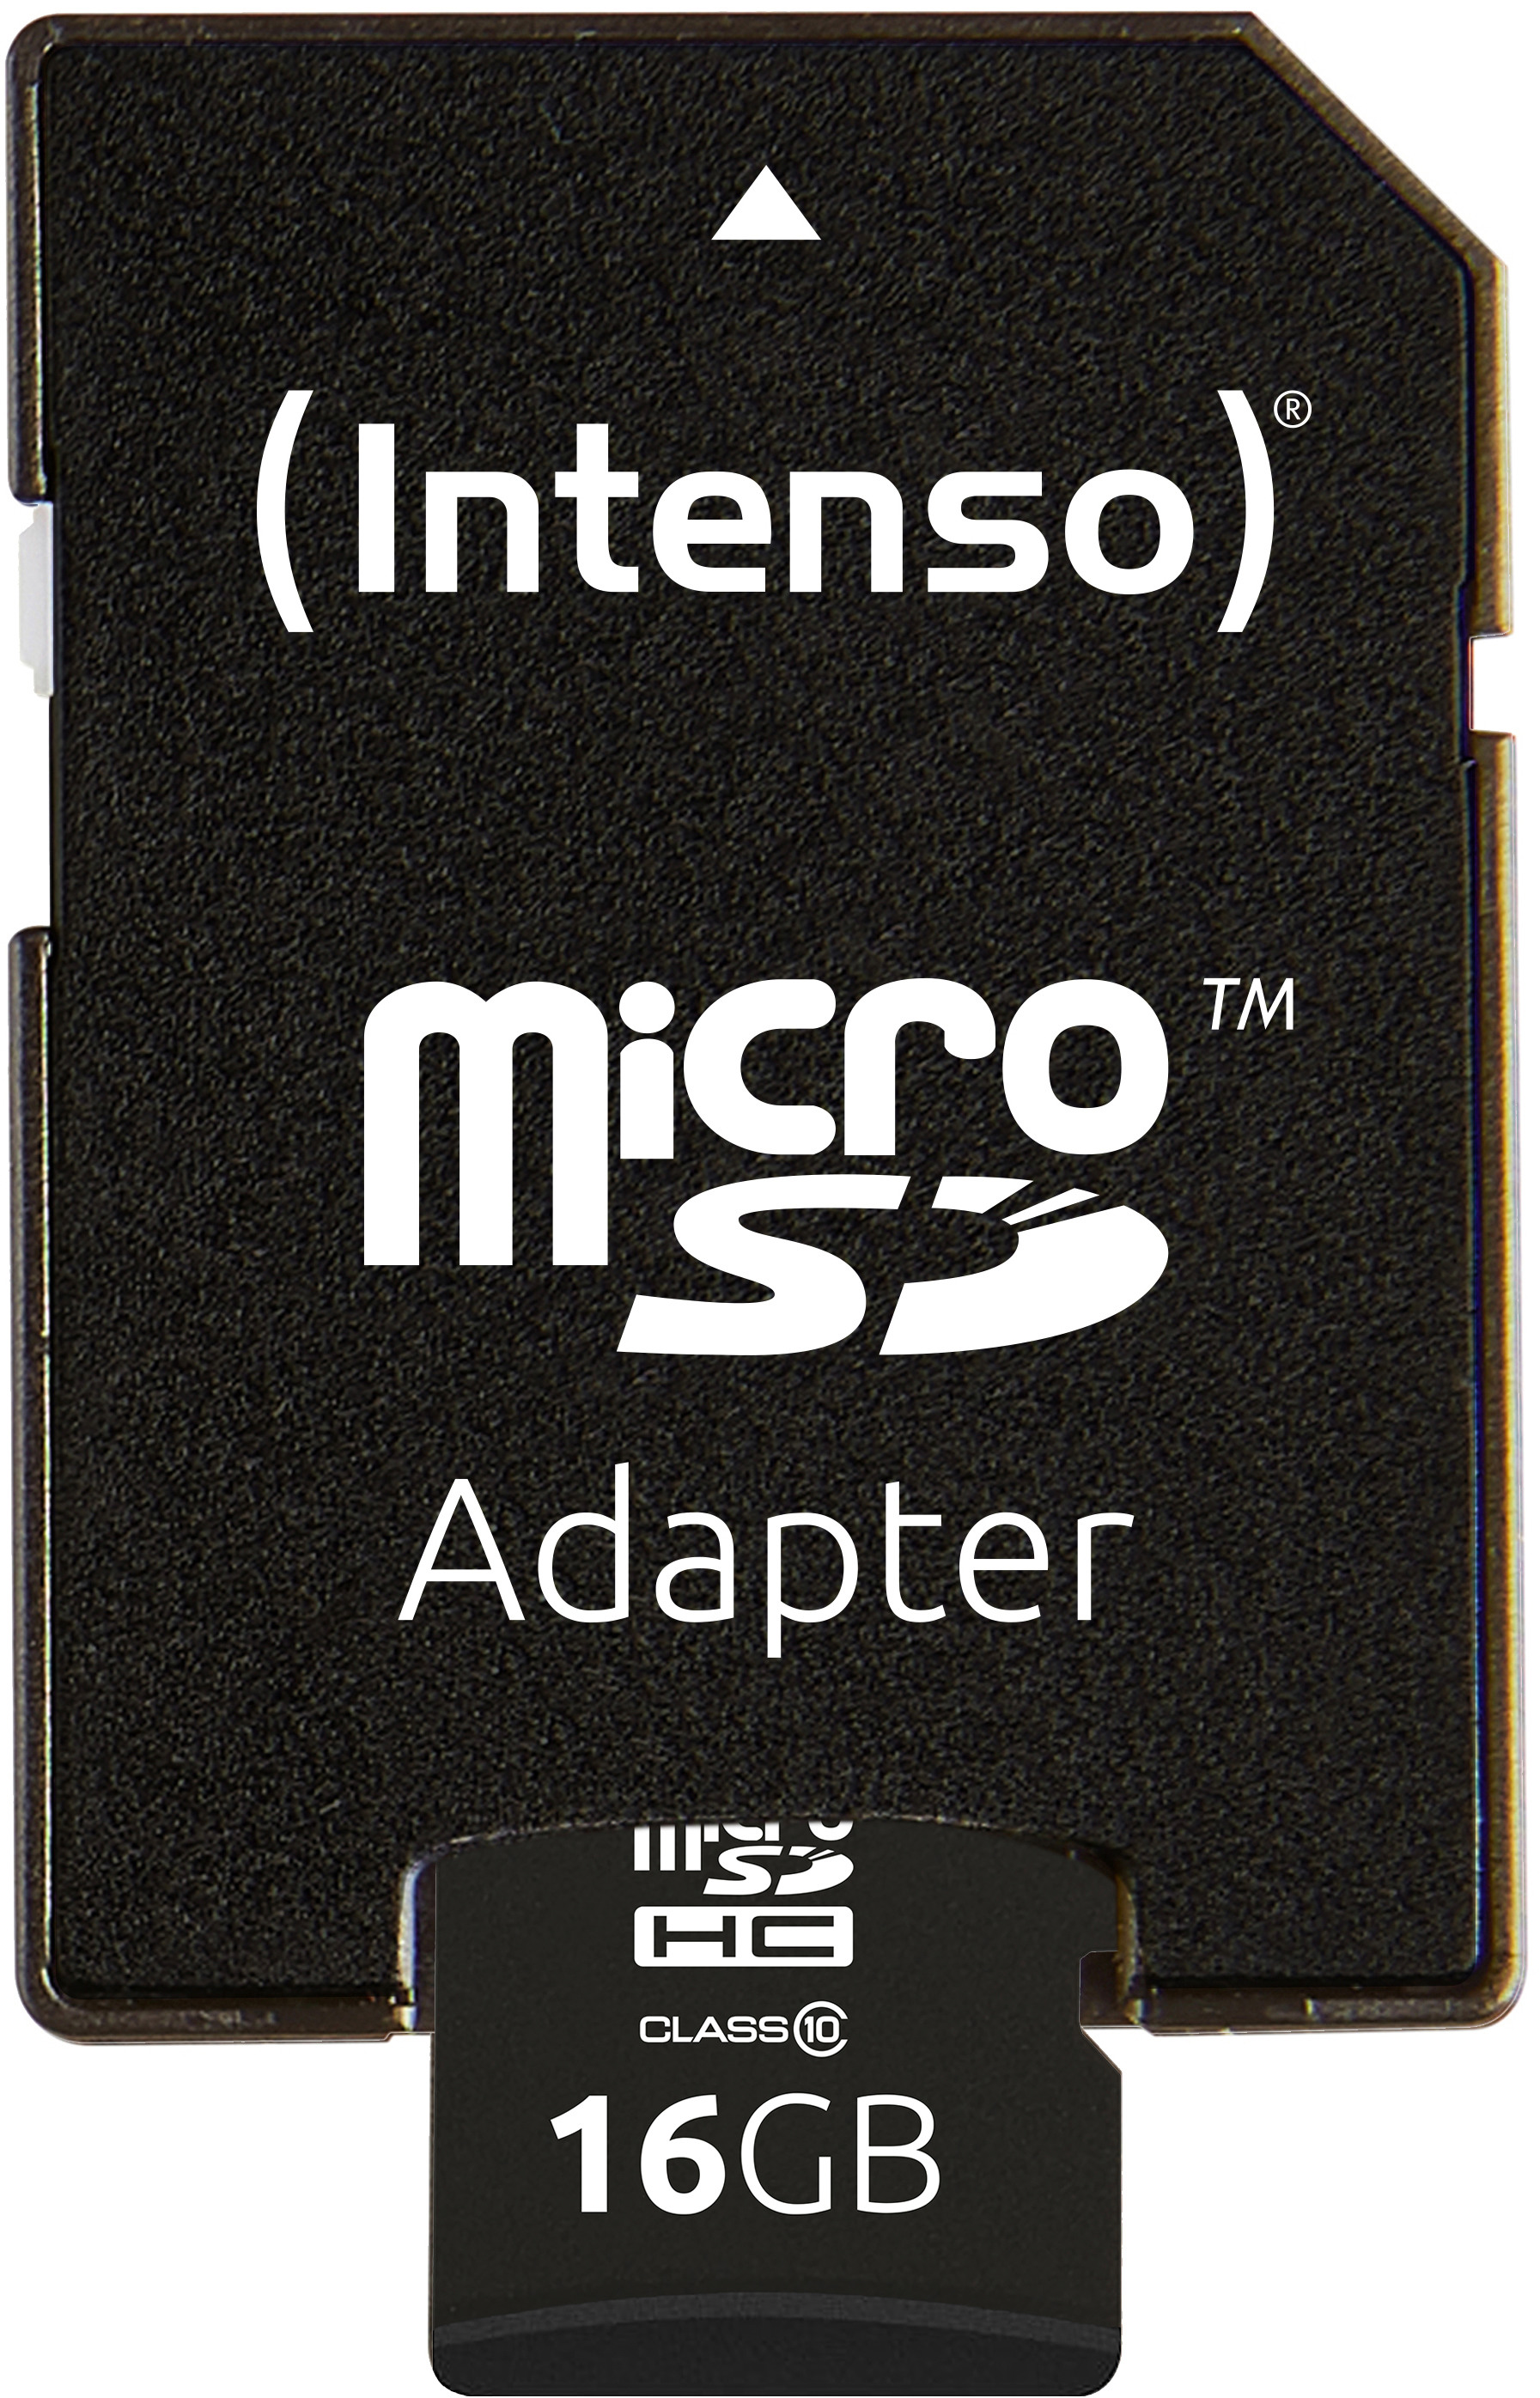 INTENSO Micro SDHC Card 16GB 3413470 Class 10